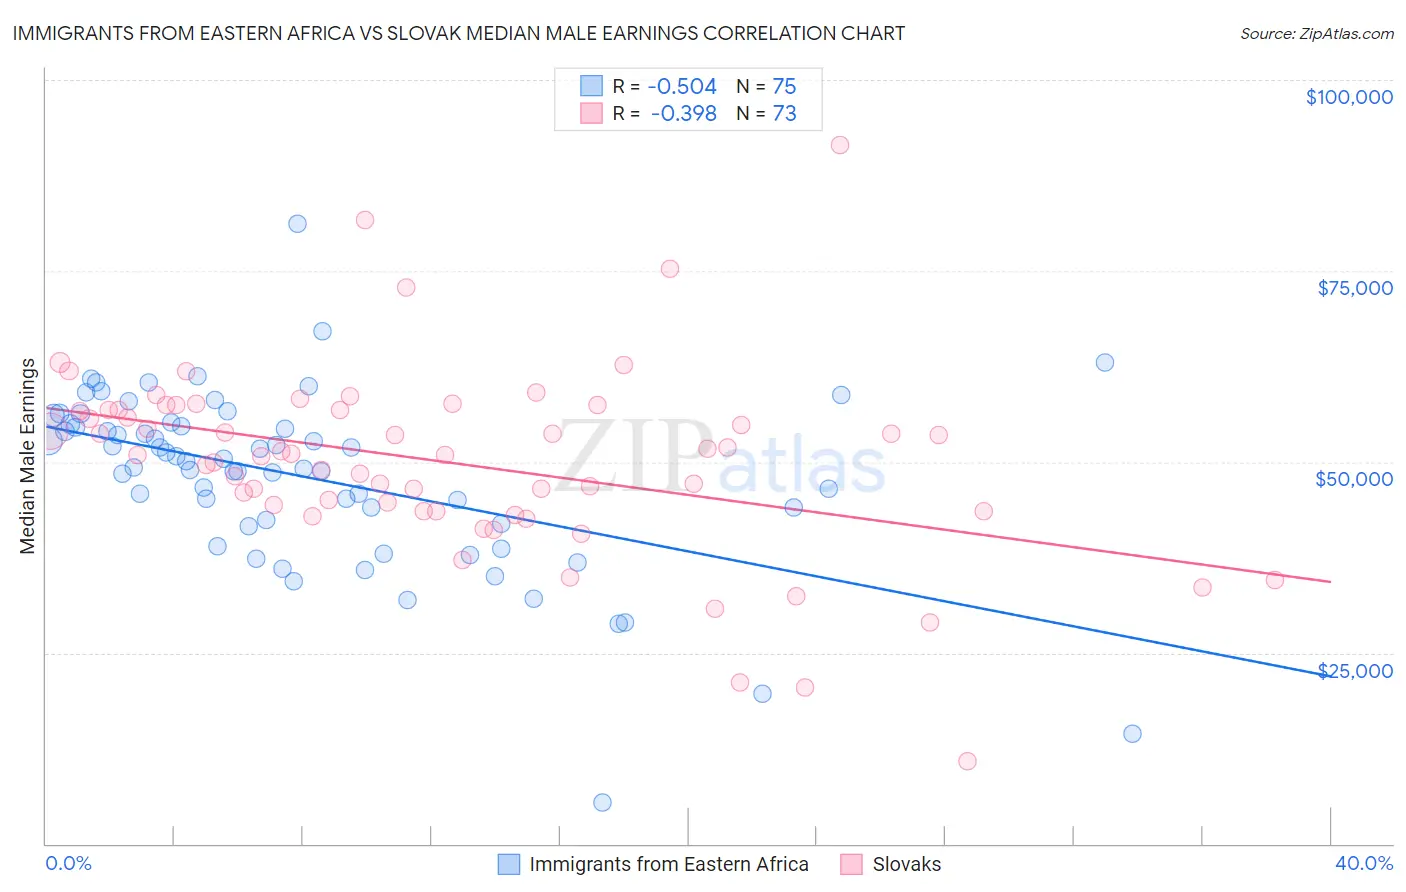 Immigrants from Eastern Africa vs Slovak Median Male Earnings